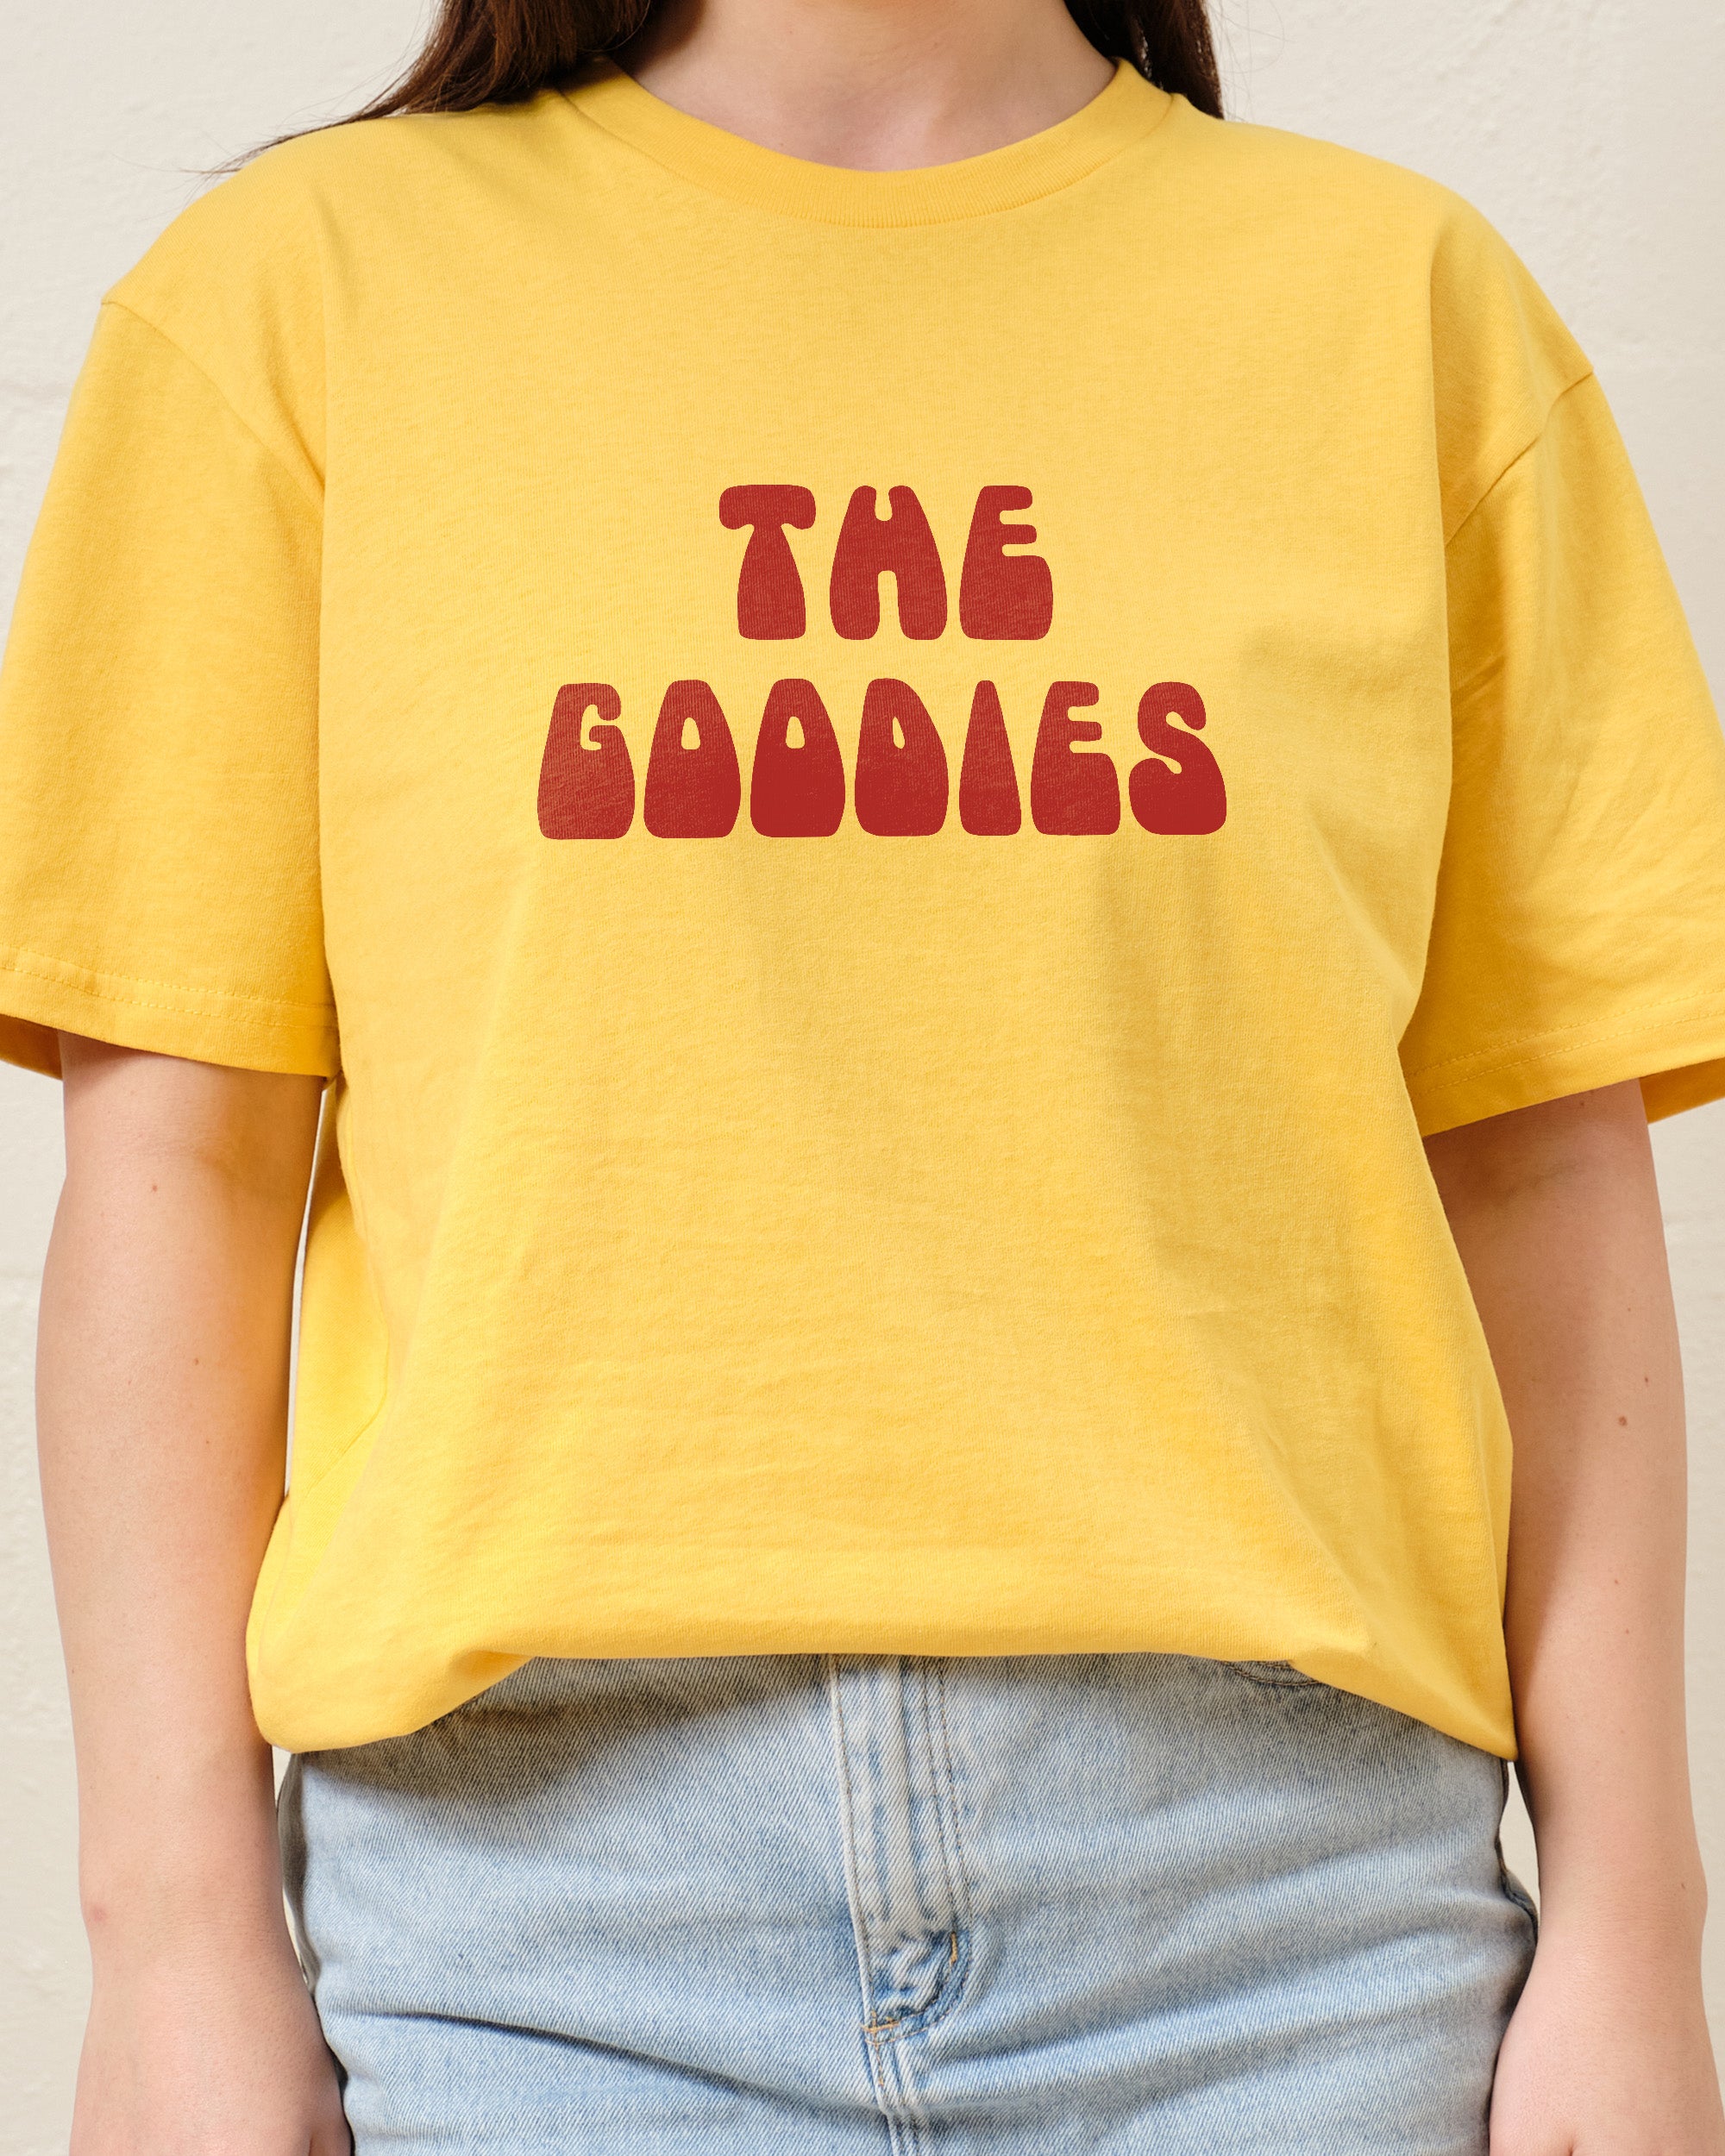 The Goodies T-Shirt